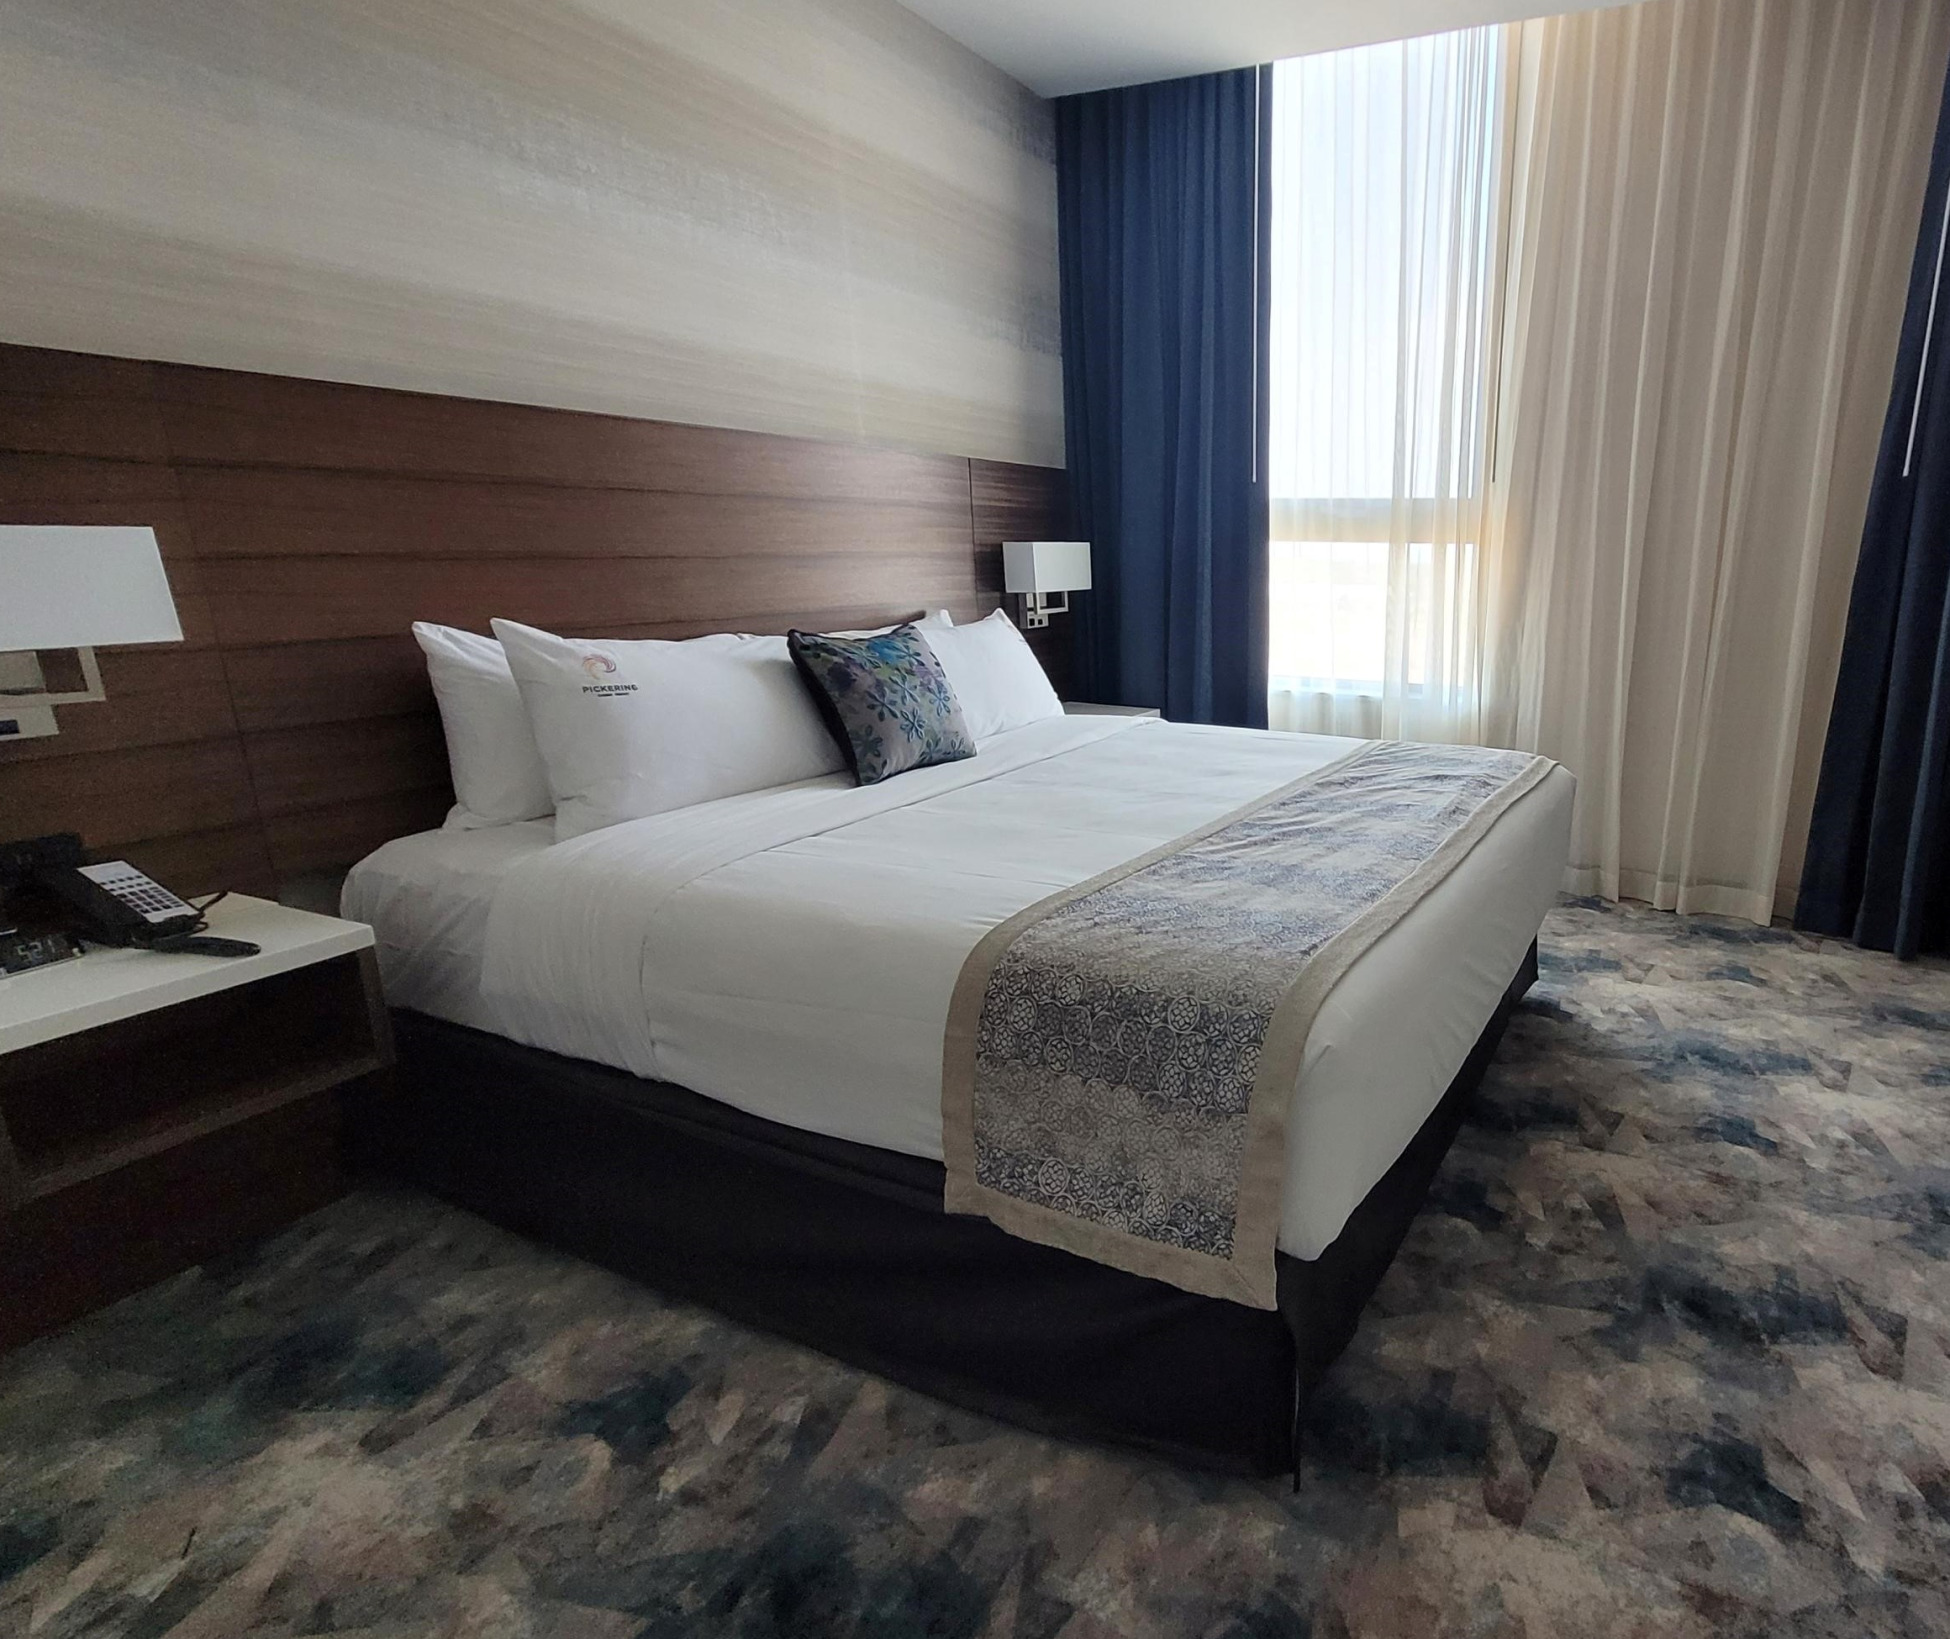 Executive Suite Bedroom at Pickering Casino Resort